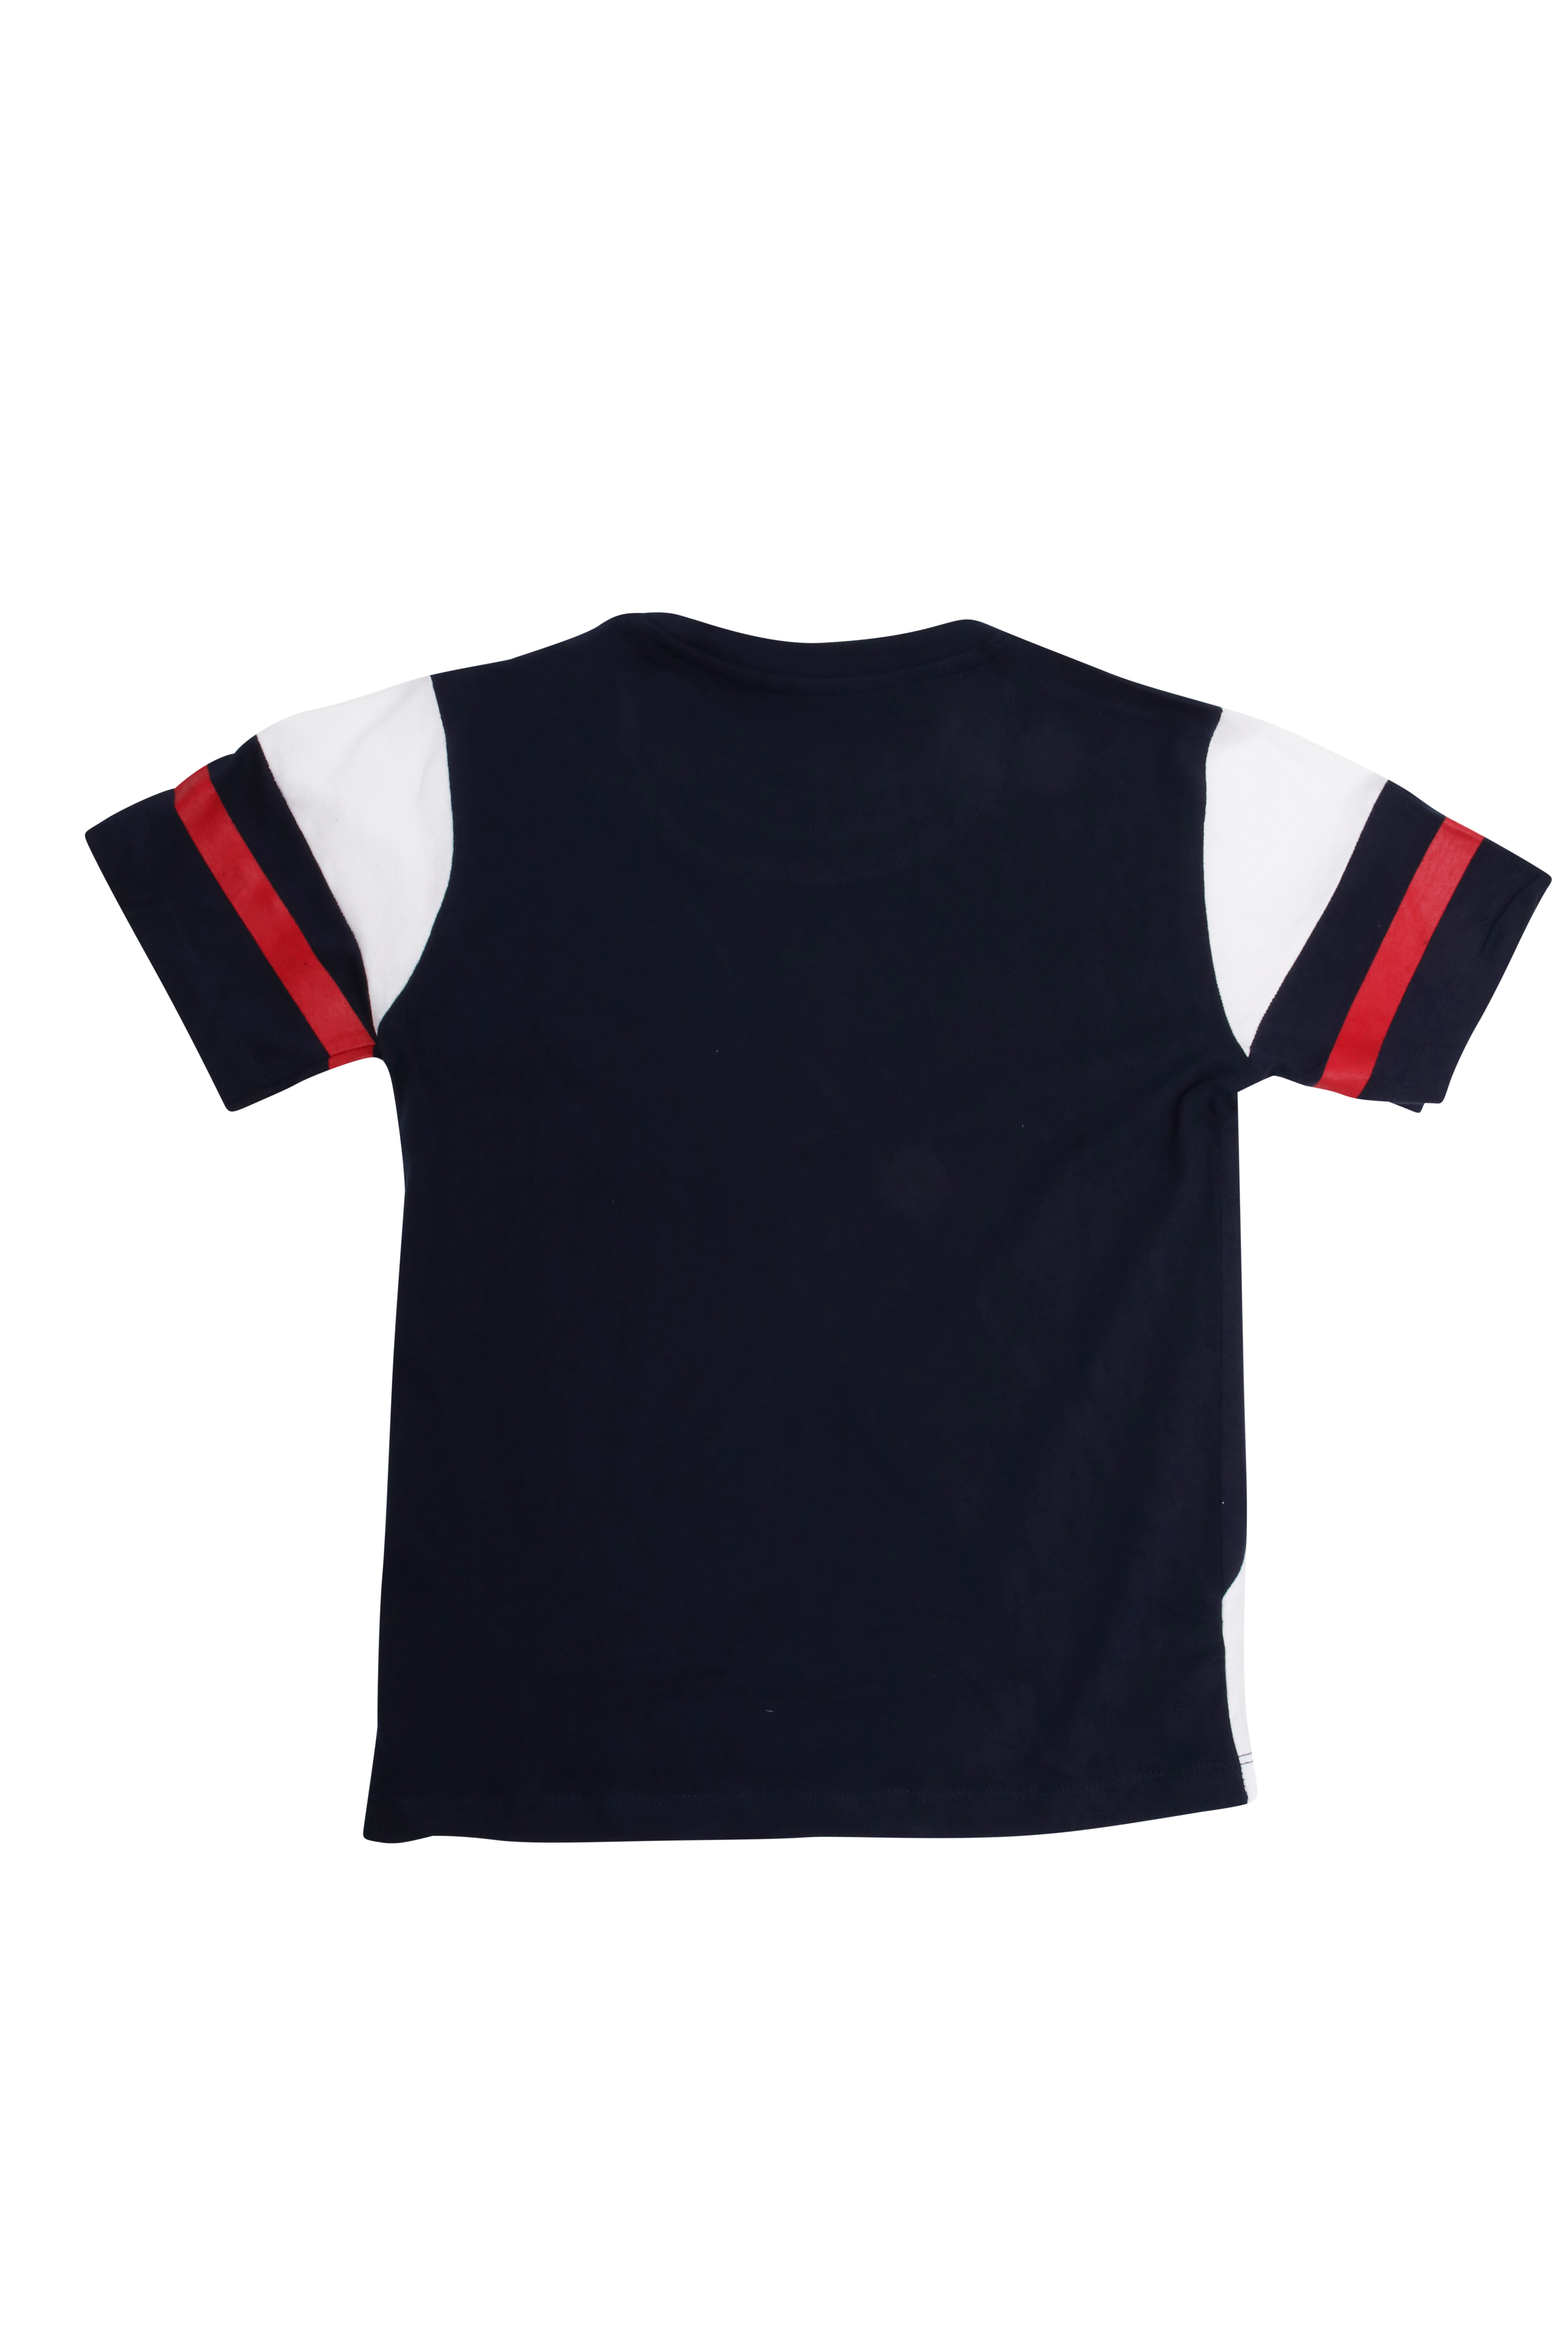 Parish Nation Boys Colorblock Short Sleeve T-Shirt, Sizes 8-18 - image 2 of 2